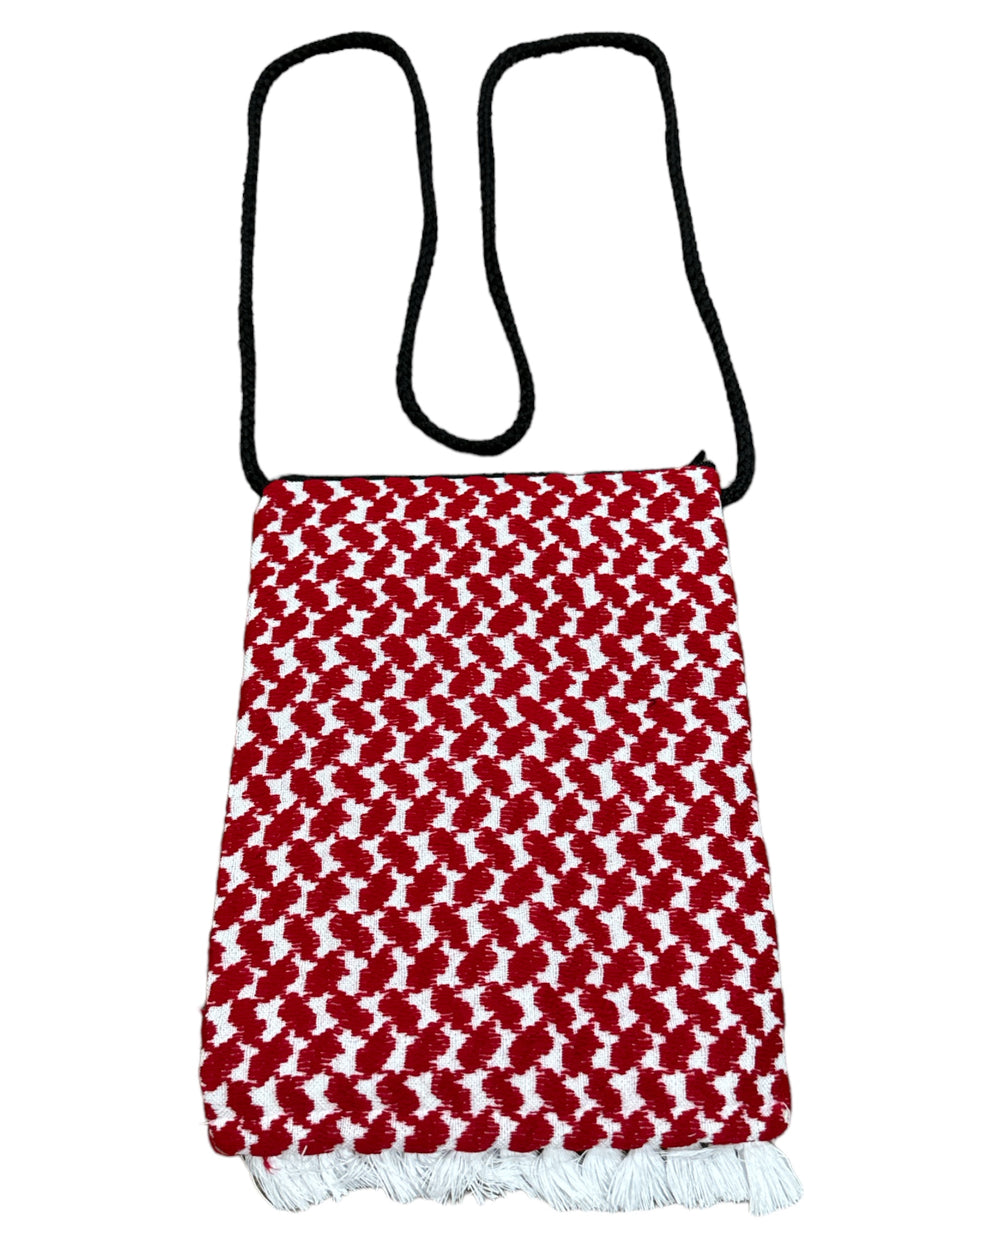 Cross Body Keffiyeh Bags: Hand Made (Red & White)